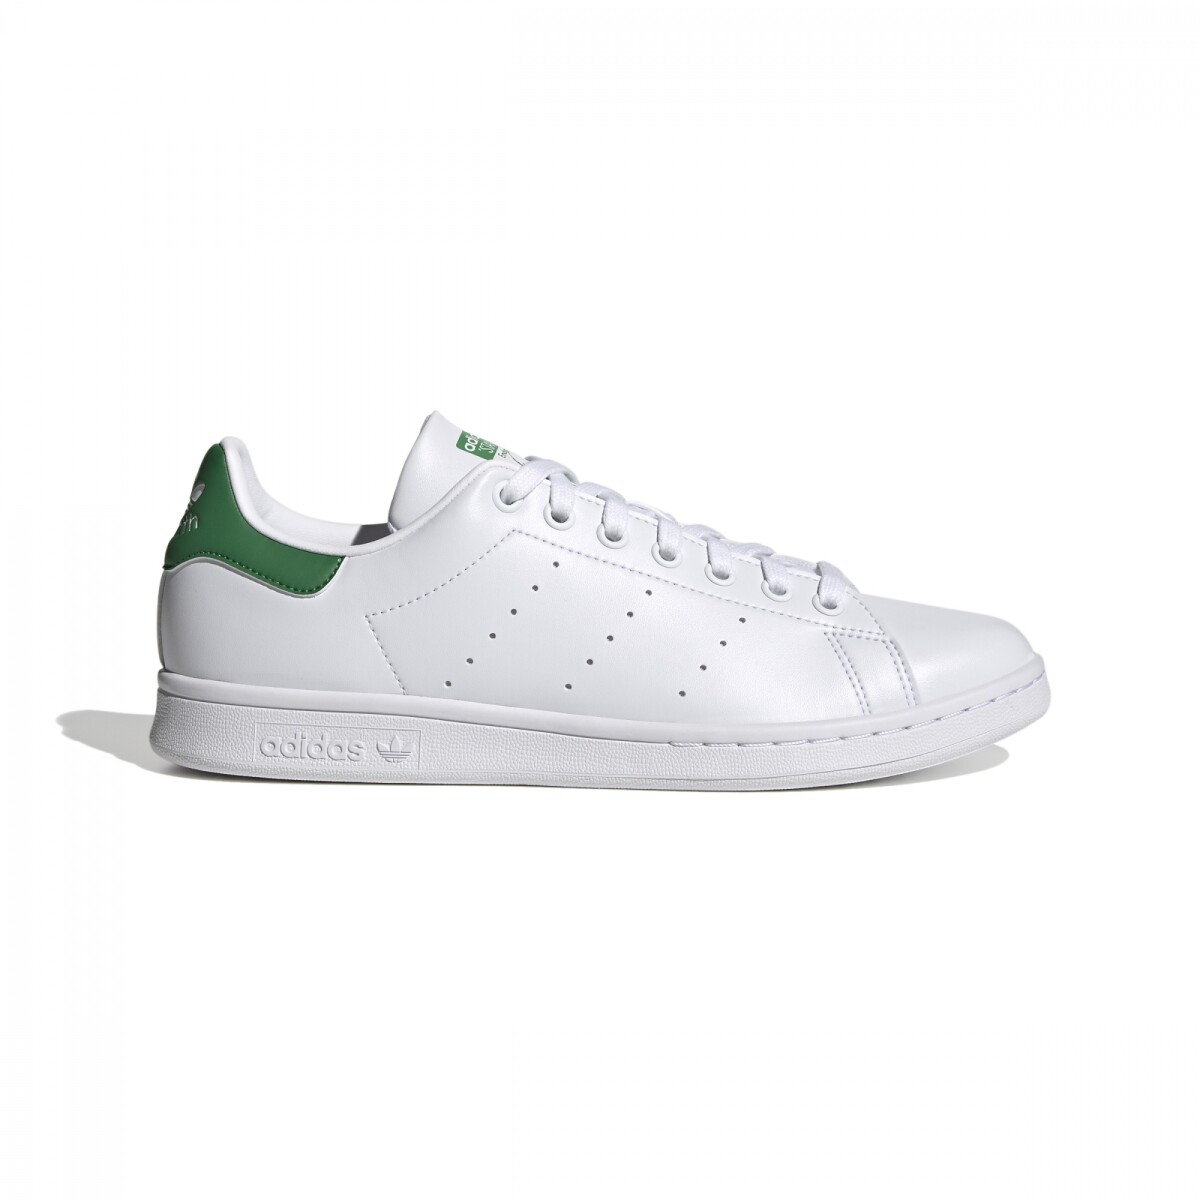 Championes Adidas unisex - ADFX5502 - WHITE/GREEN 